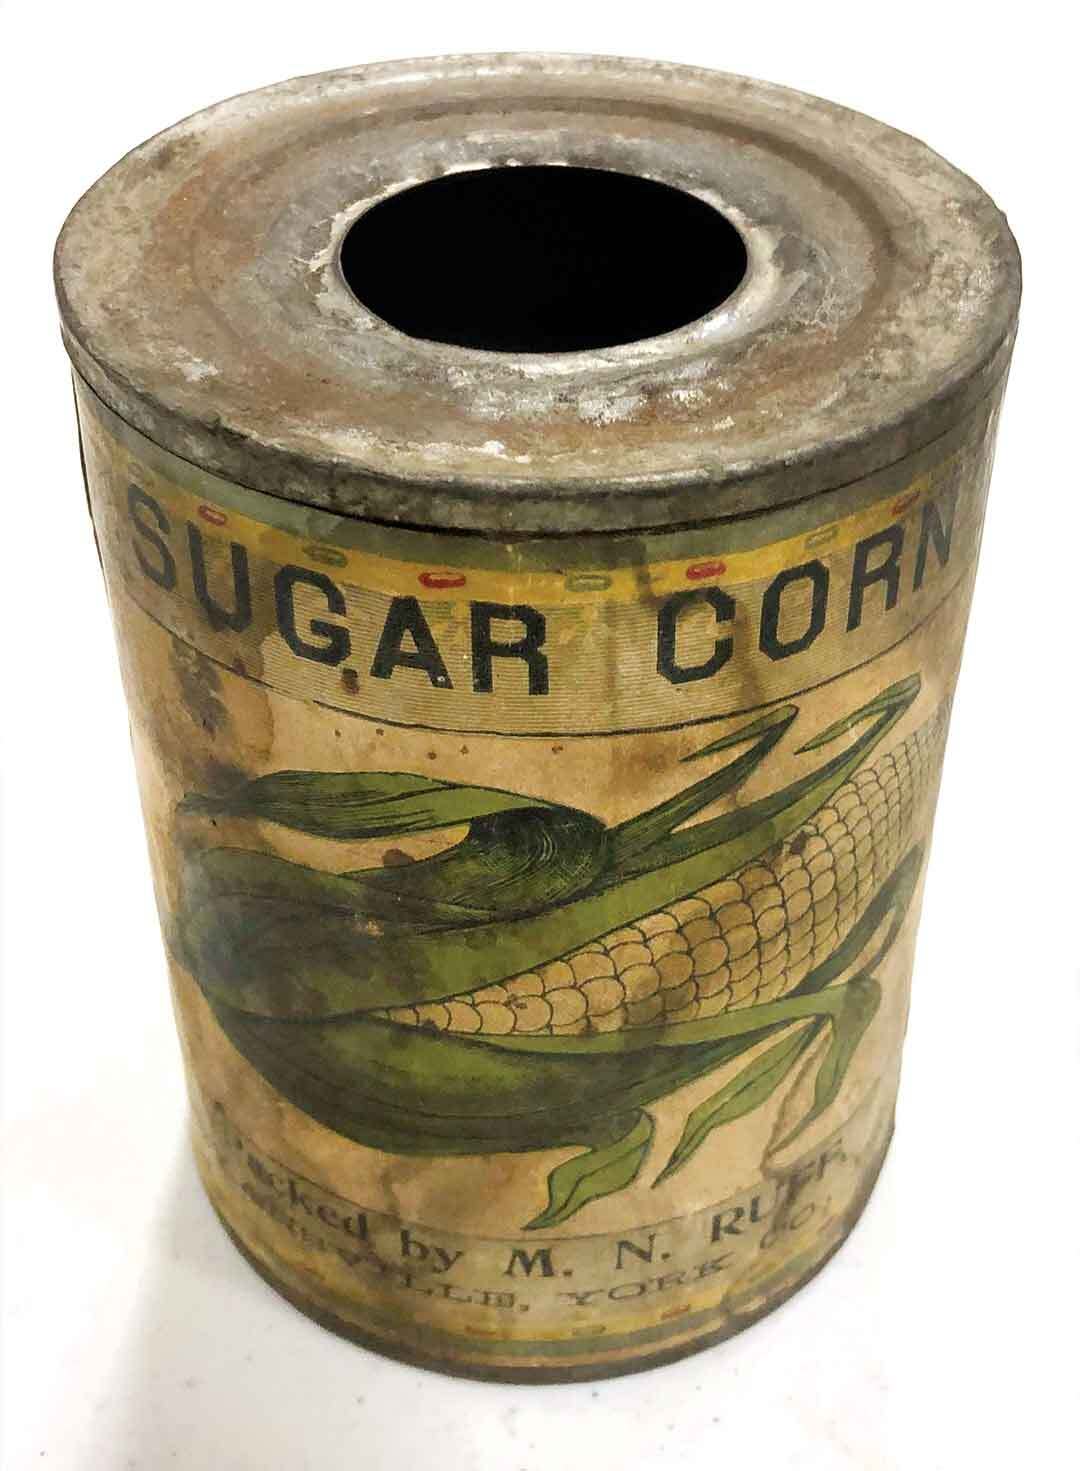 Rusty sugar corn can